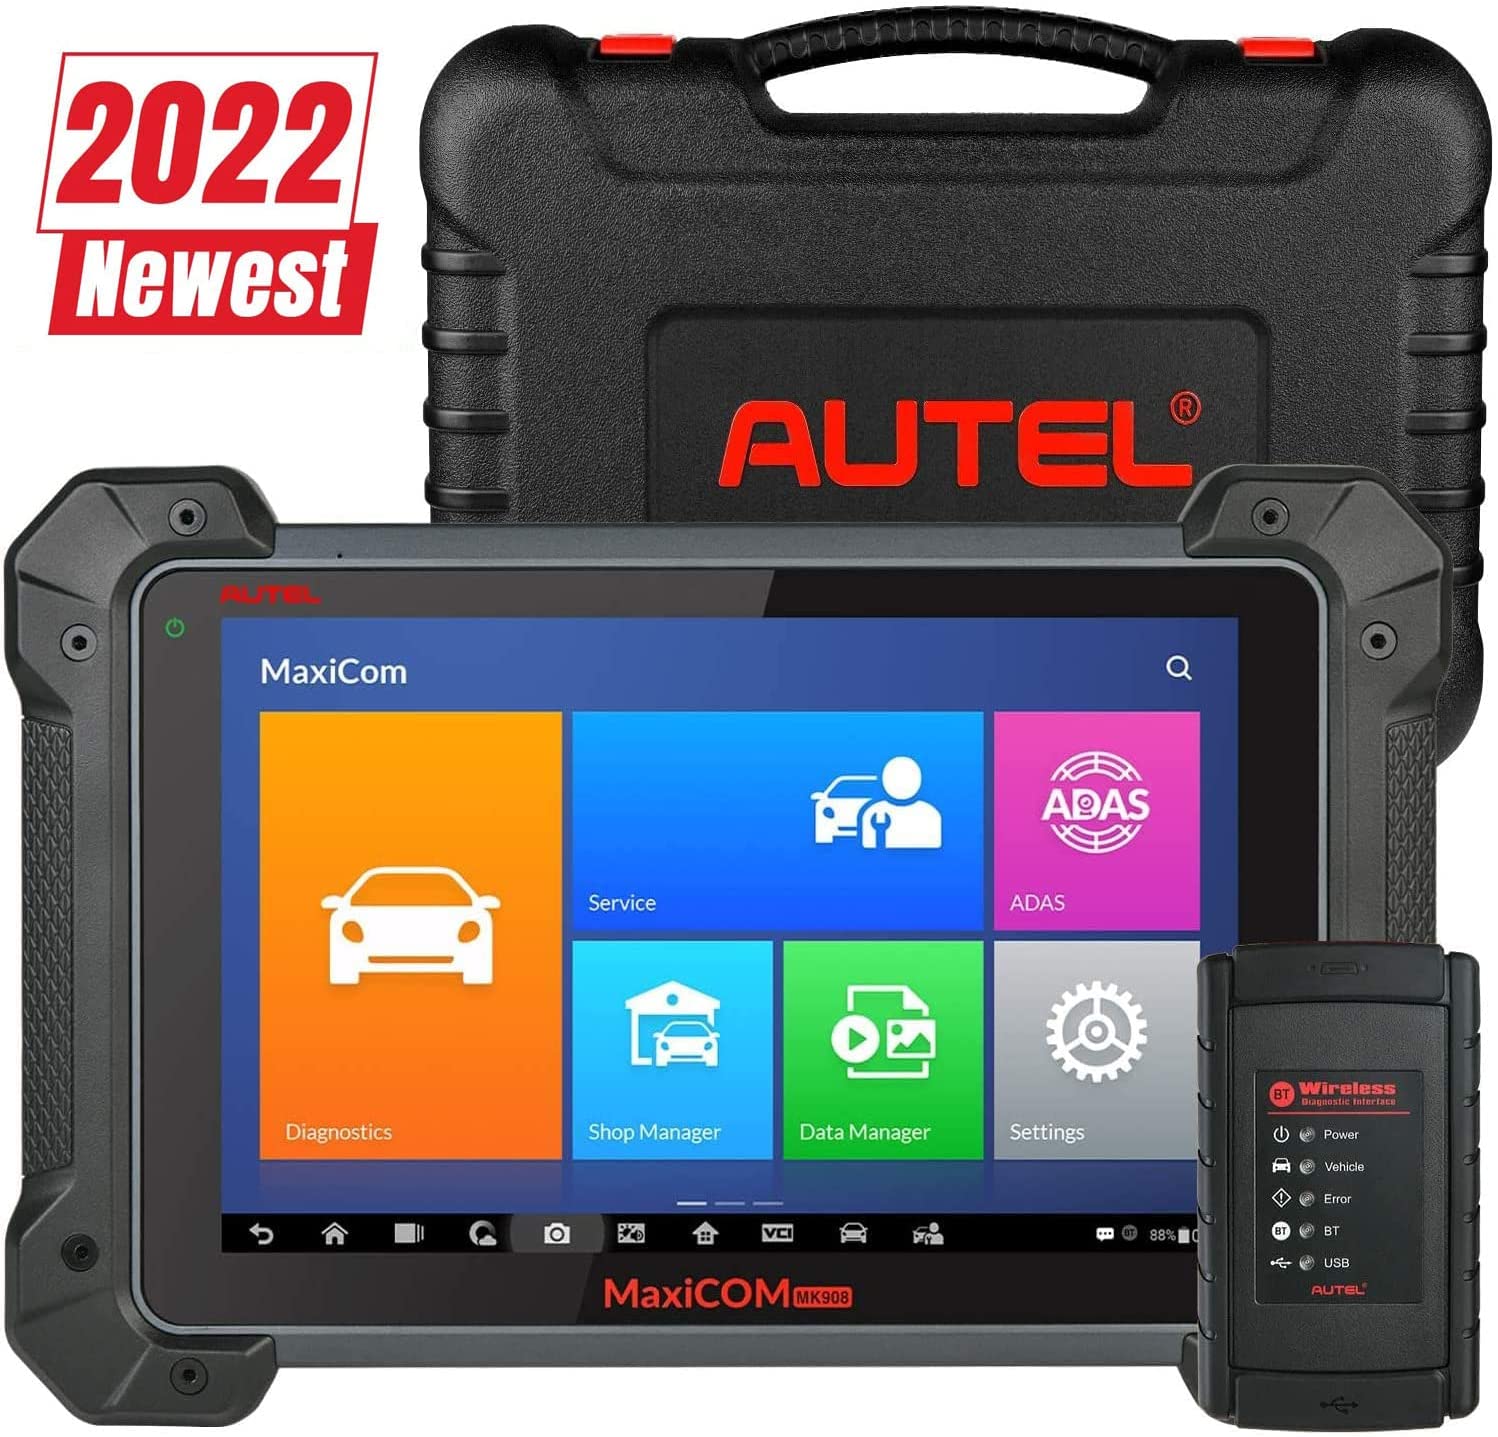 Autel MK908 is newest diagnostic tool